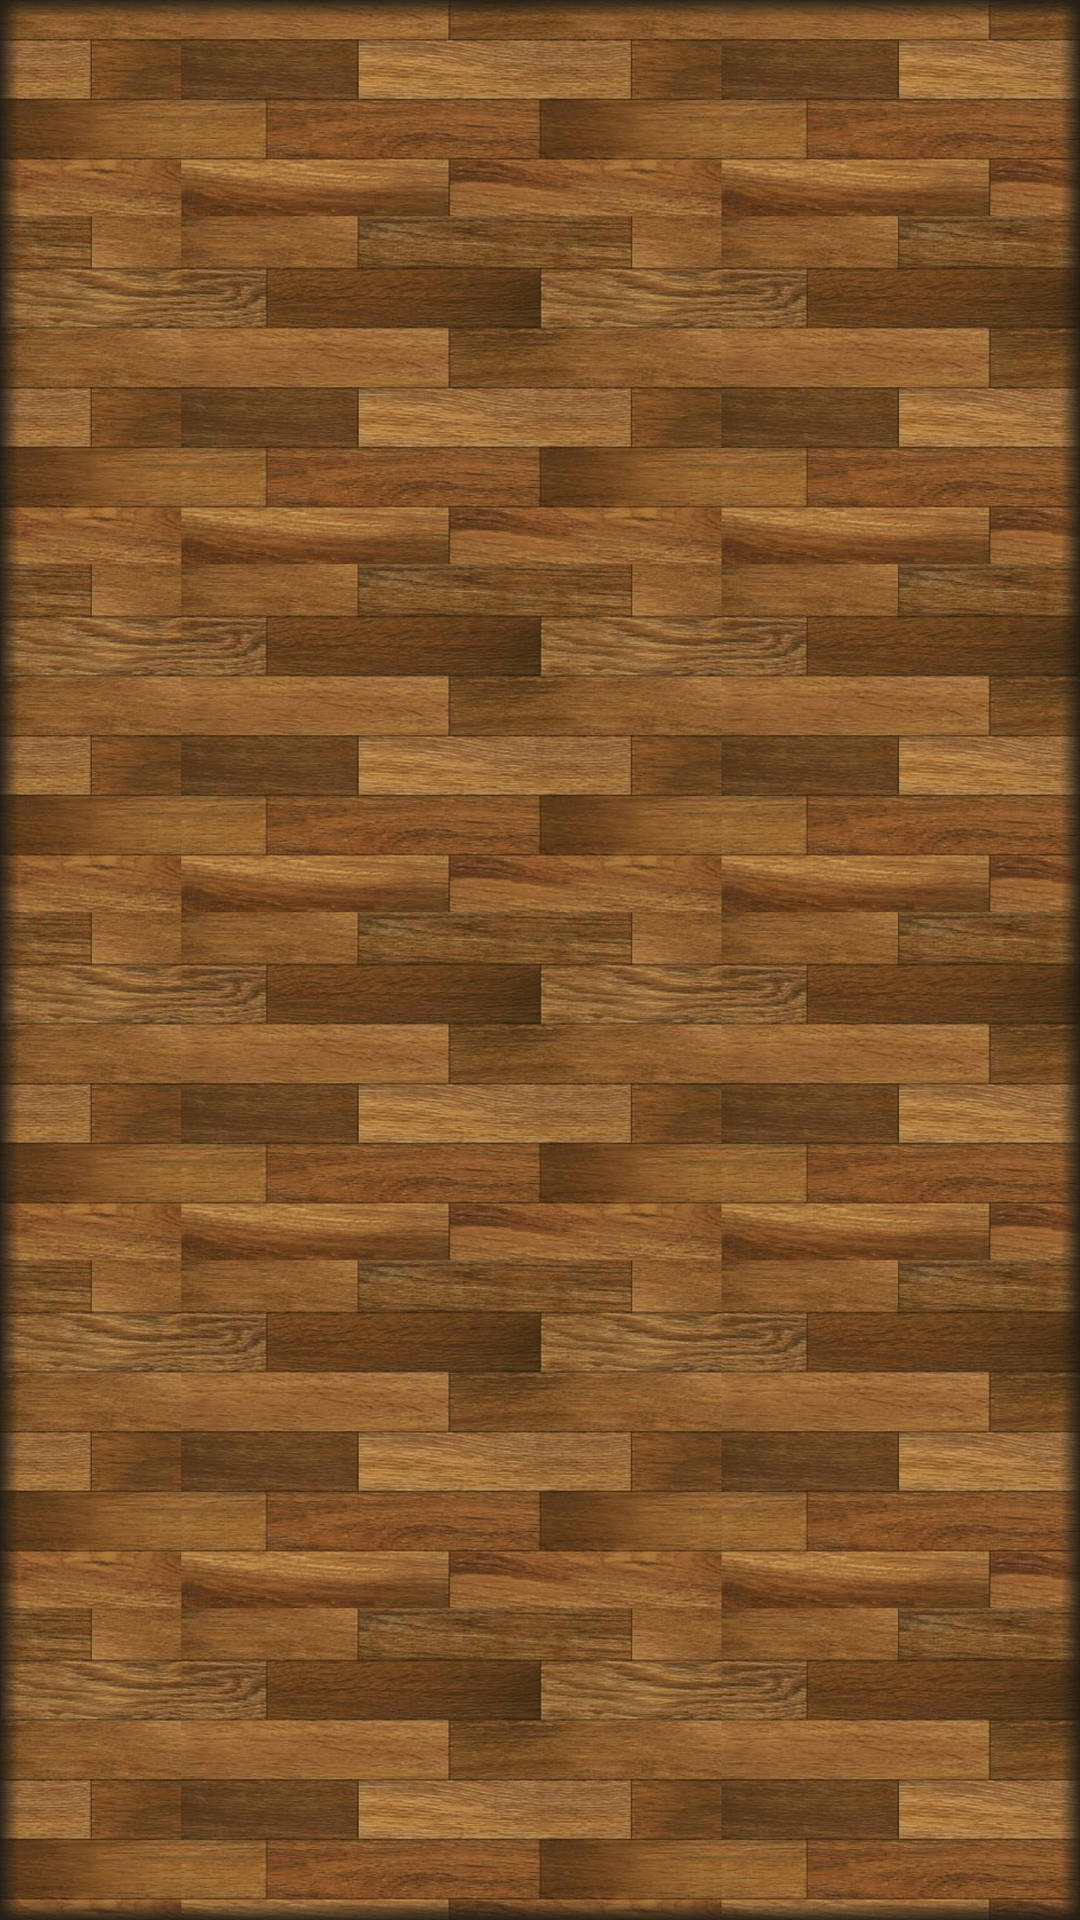 Samsung A51 Wooden Floor Panels Wallpaper